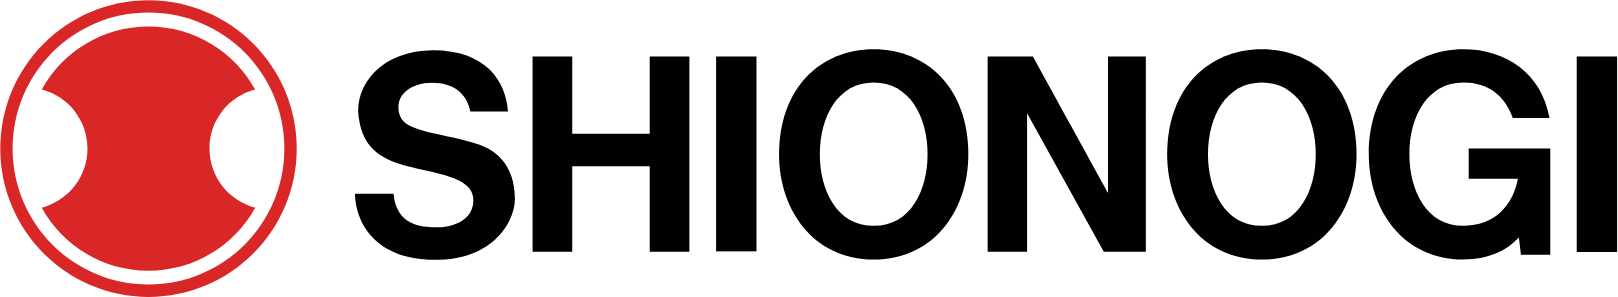 Shionogi
 logo large (transparent PNG)